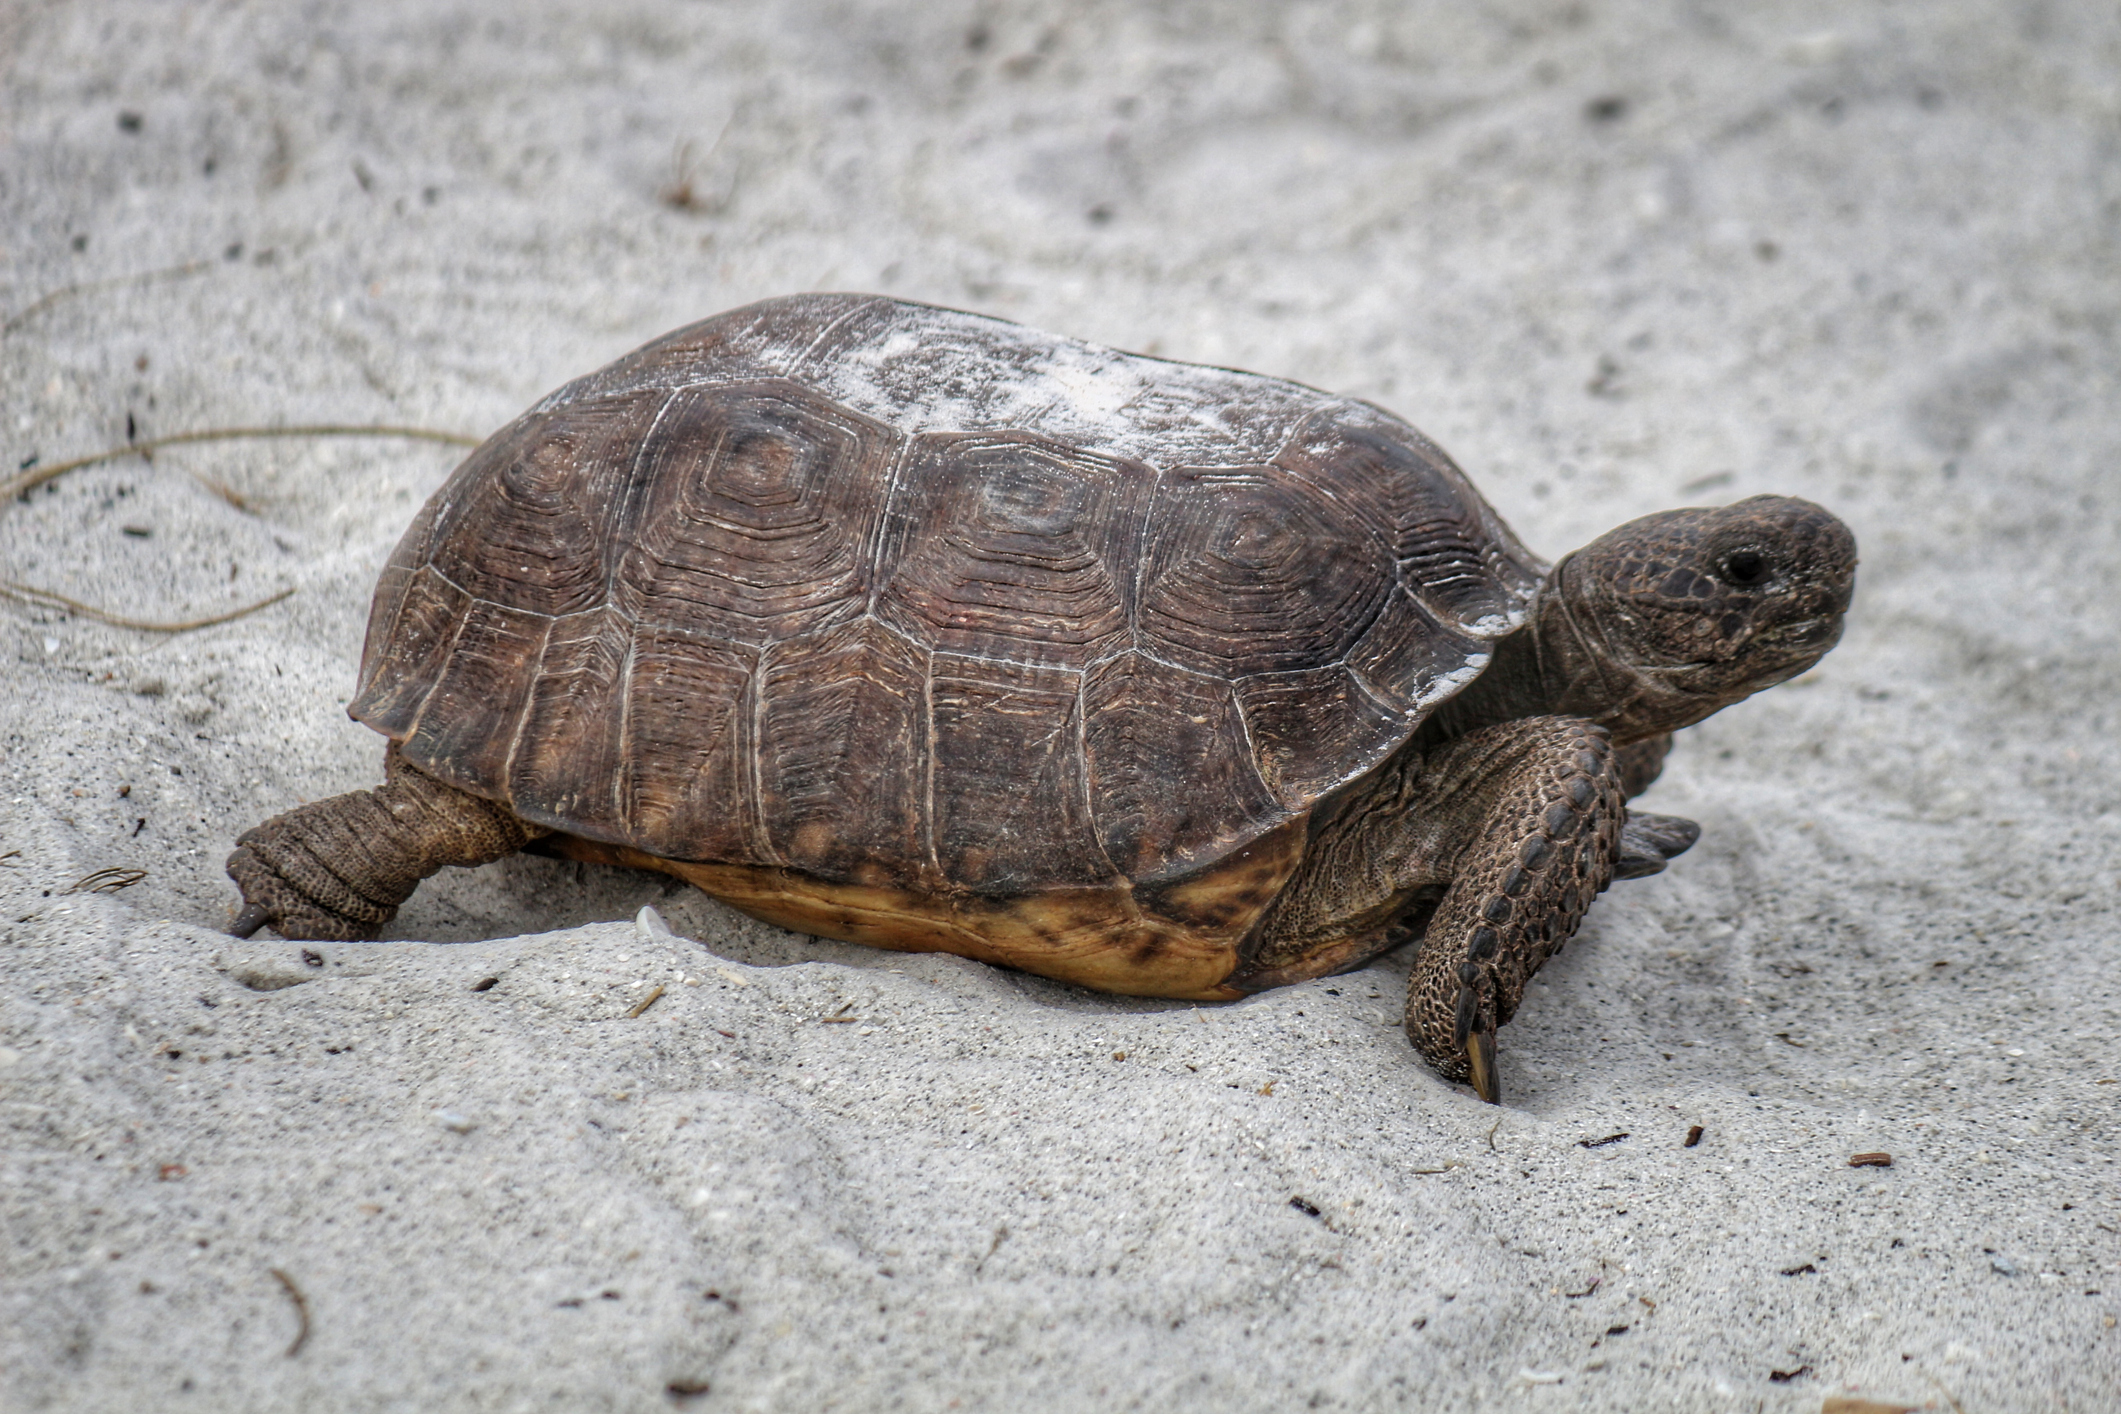 ‘Lizard King’ Gets 7 Months For Trafficking Florida Turtles